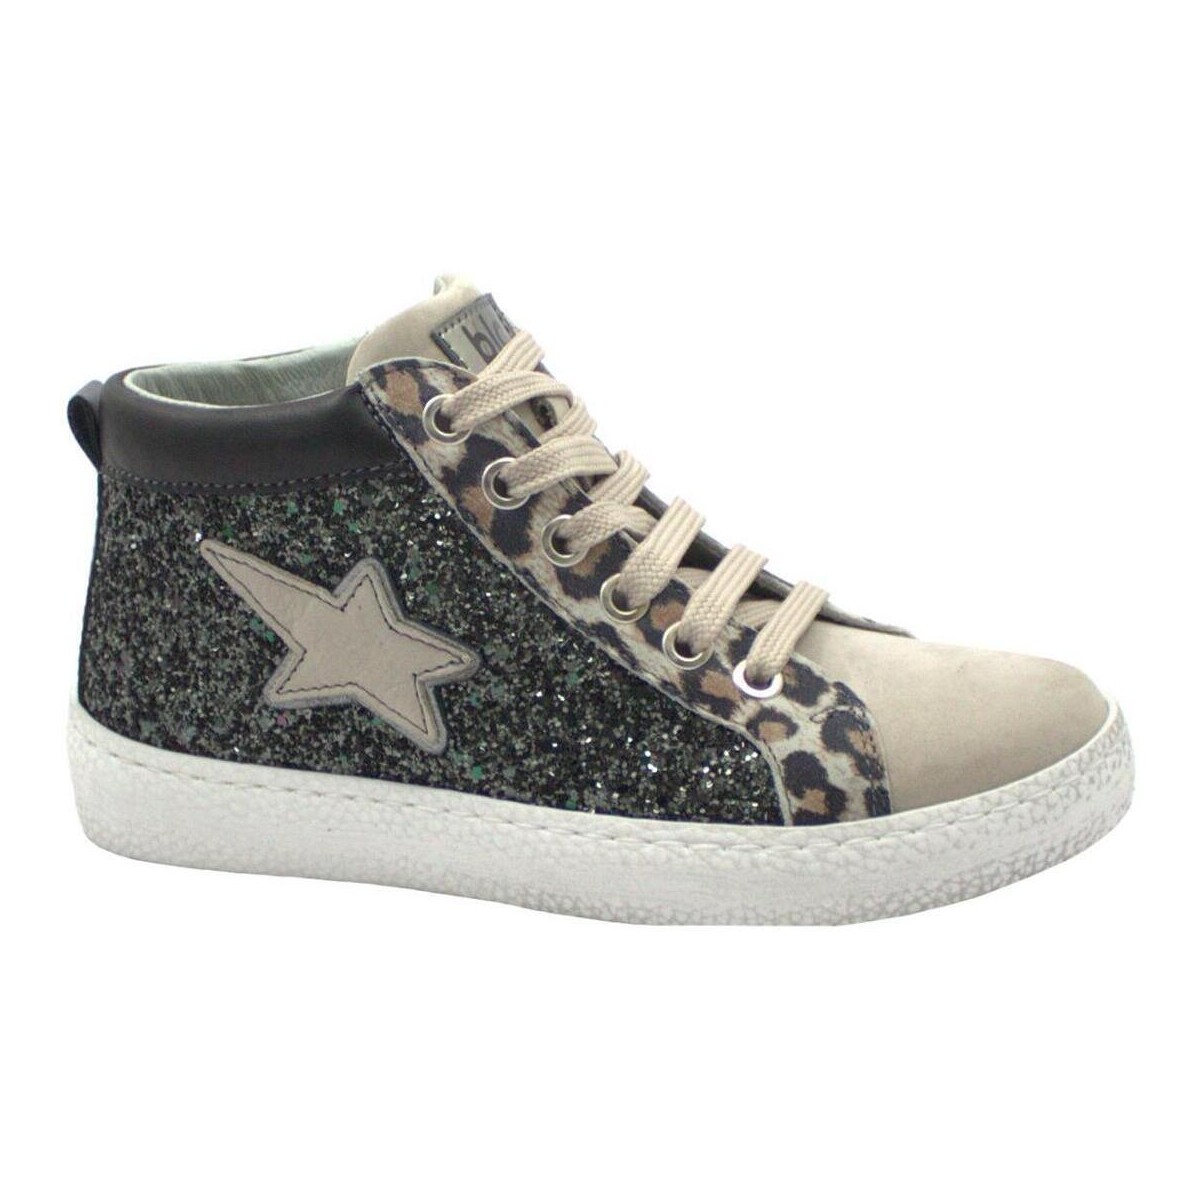 Schuhe Kinder Sneaker Low Balocchi BAL-I23-632581-PE-a Grau